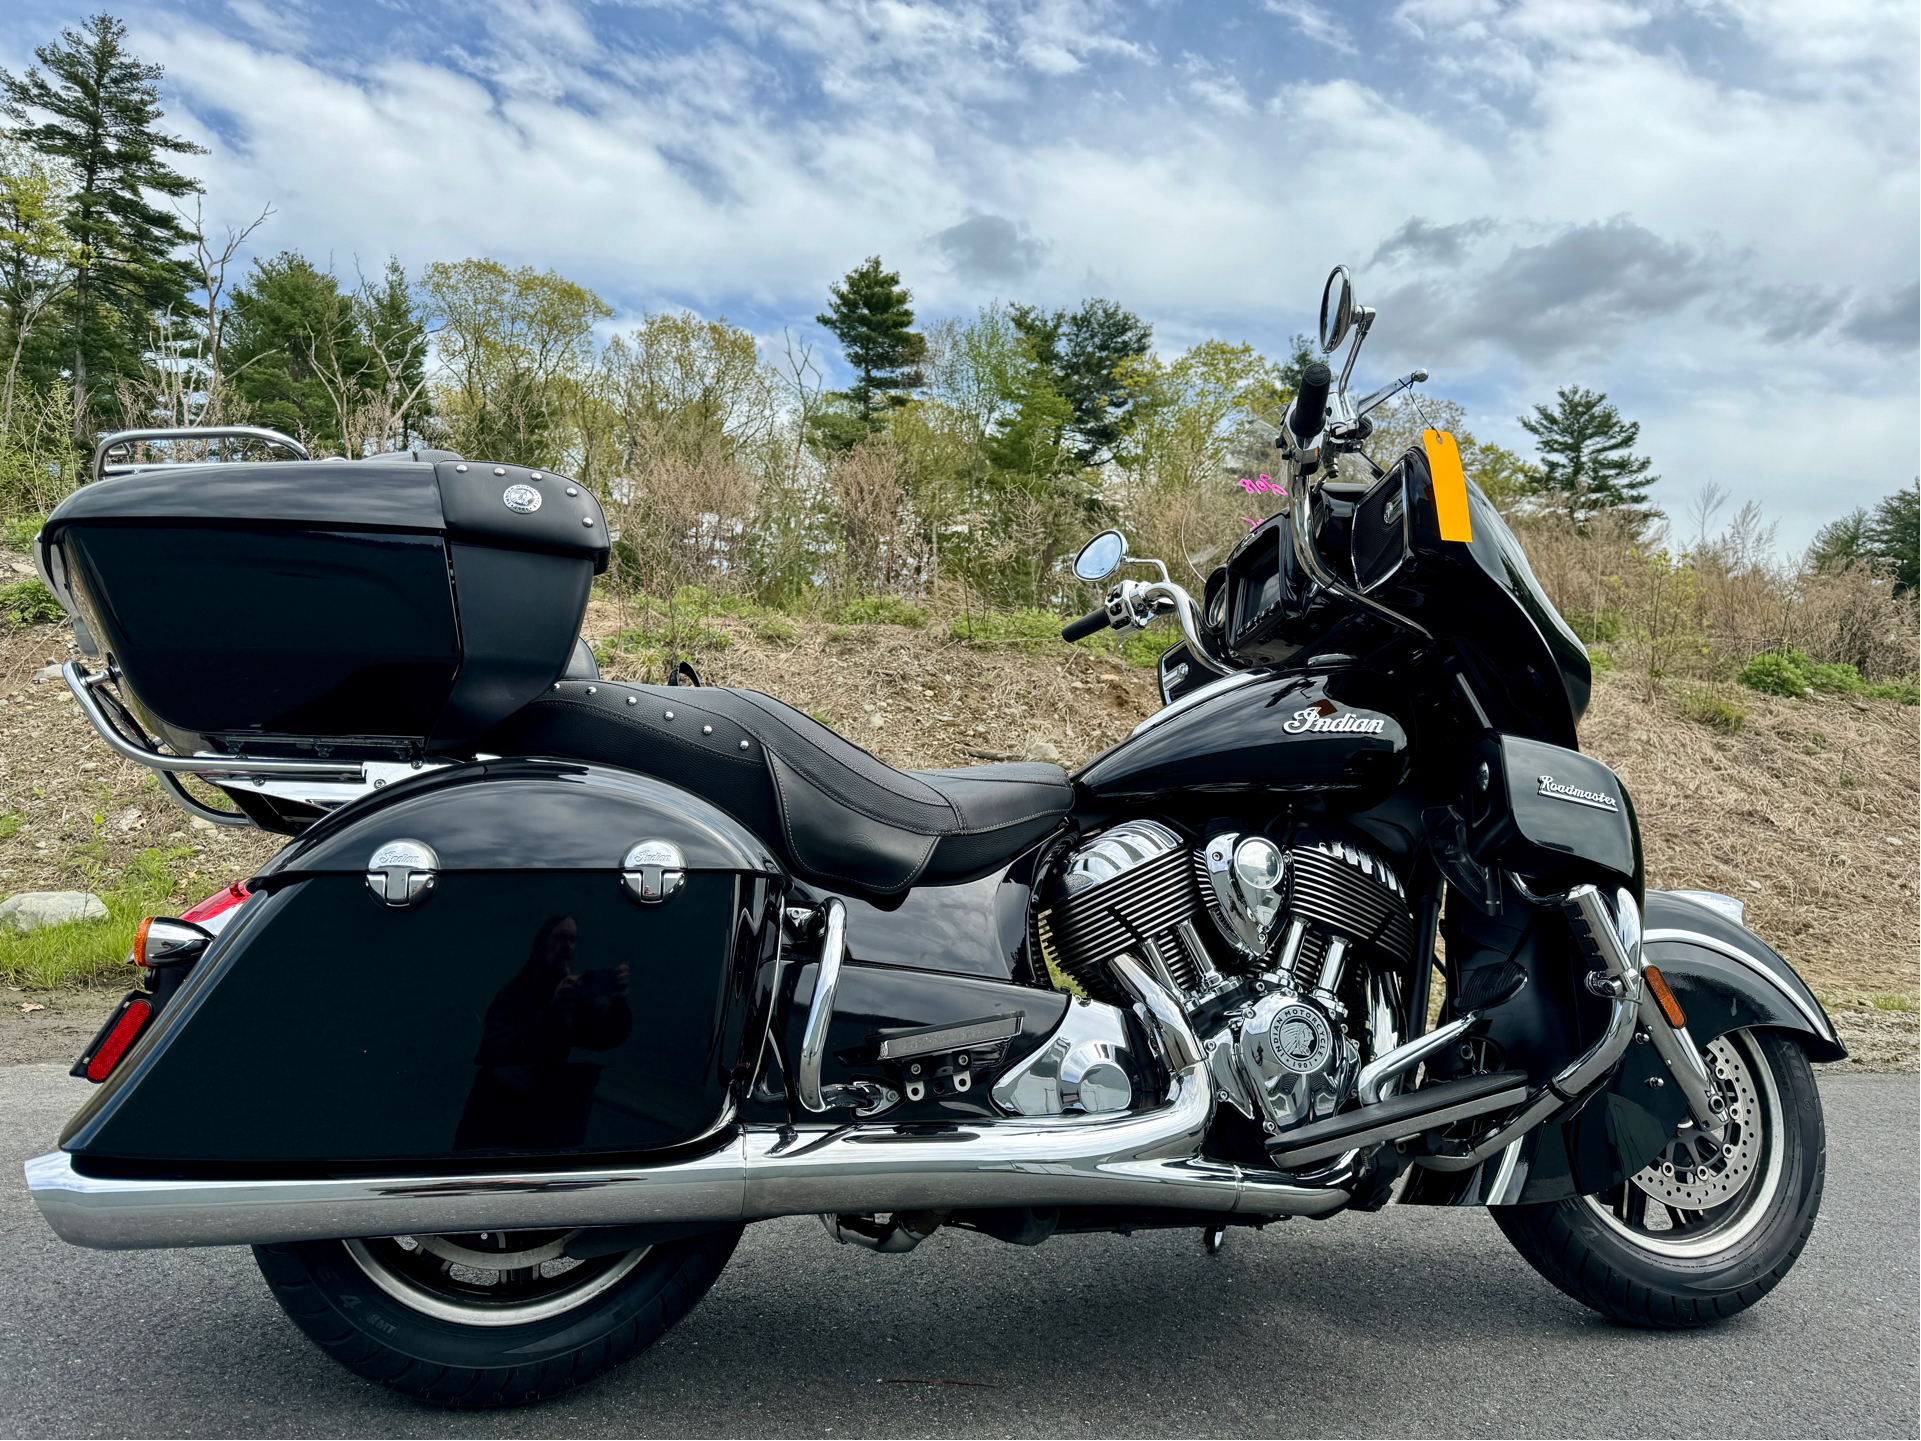 2018 Indian Motorcycle Roadmaster® ABS in Foxboro, Massachusetts - Photo 12